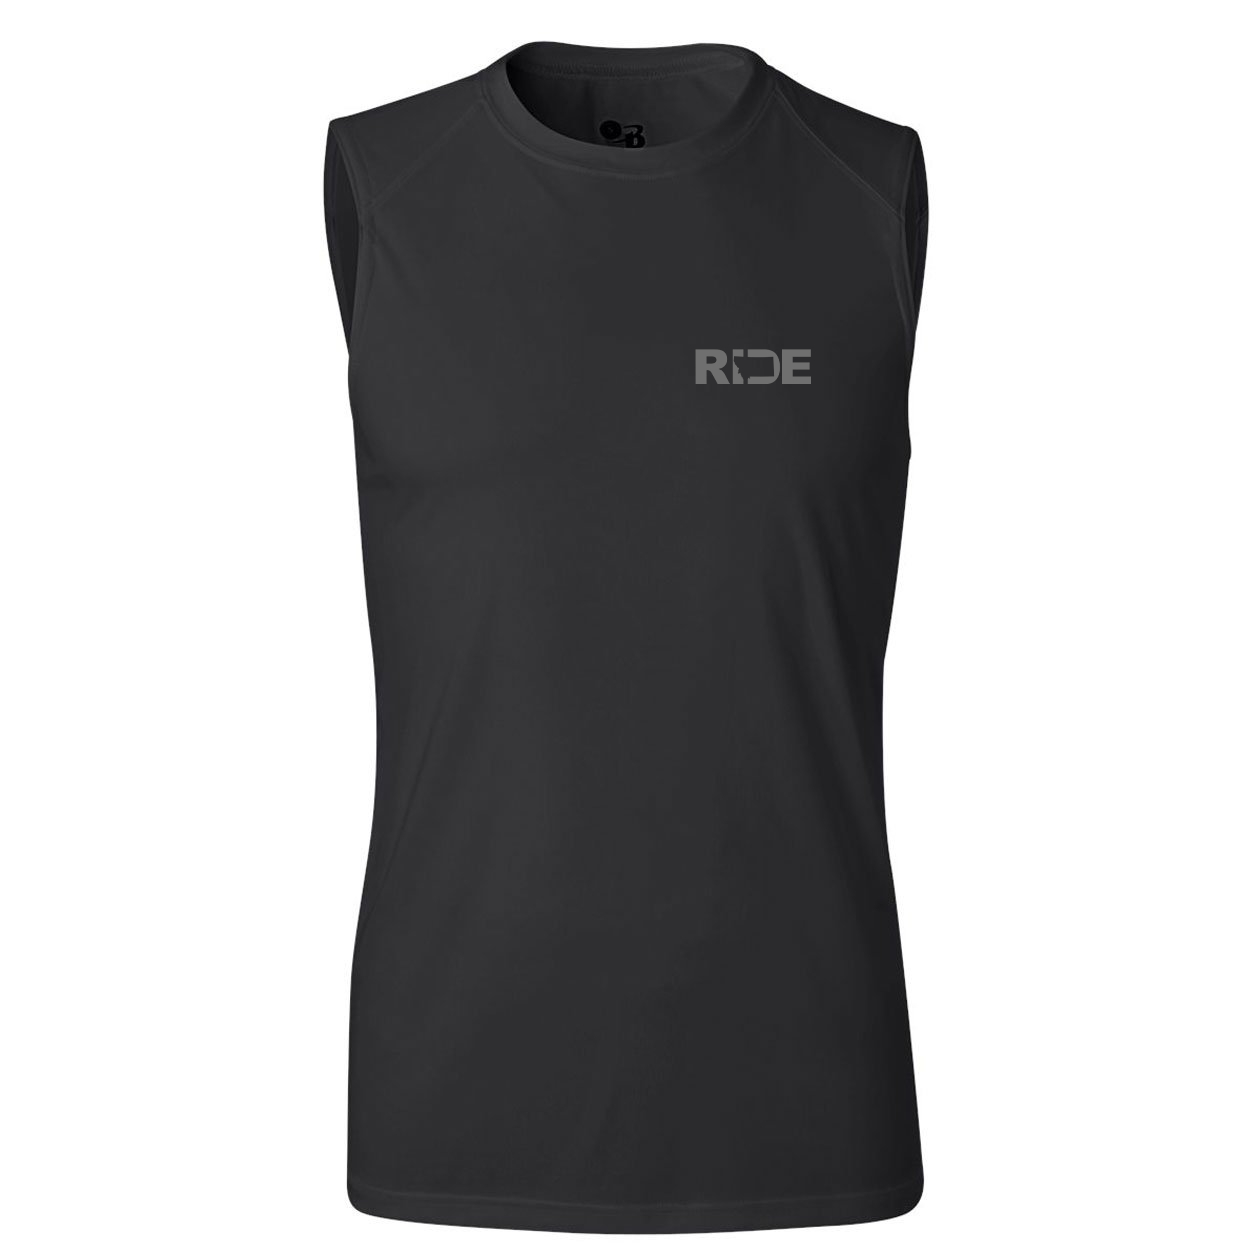 Ride Montana Night Out Unisex Performance Sleeveless T-Shirt Black (Gray Logo)